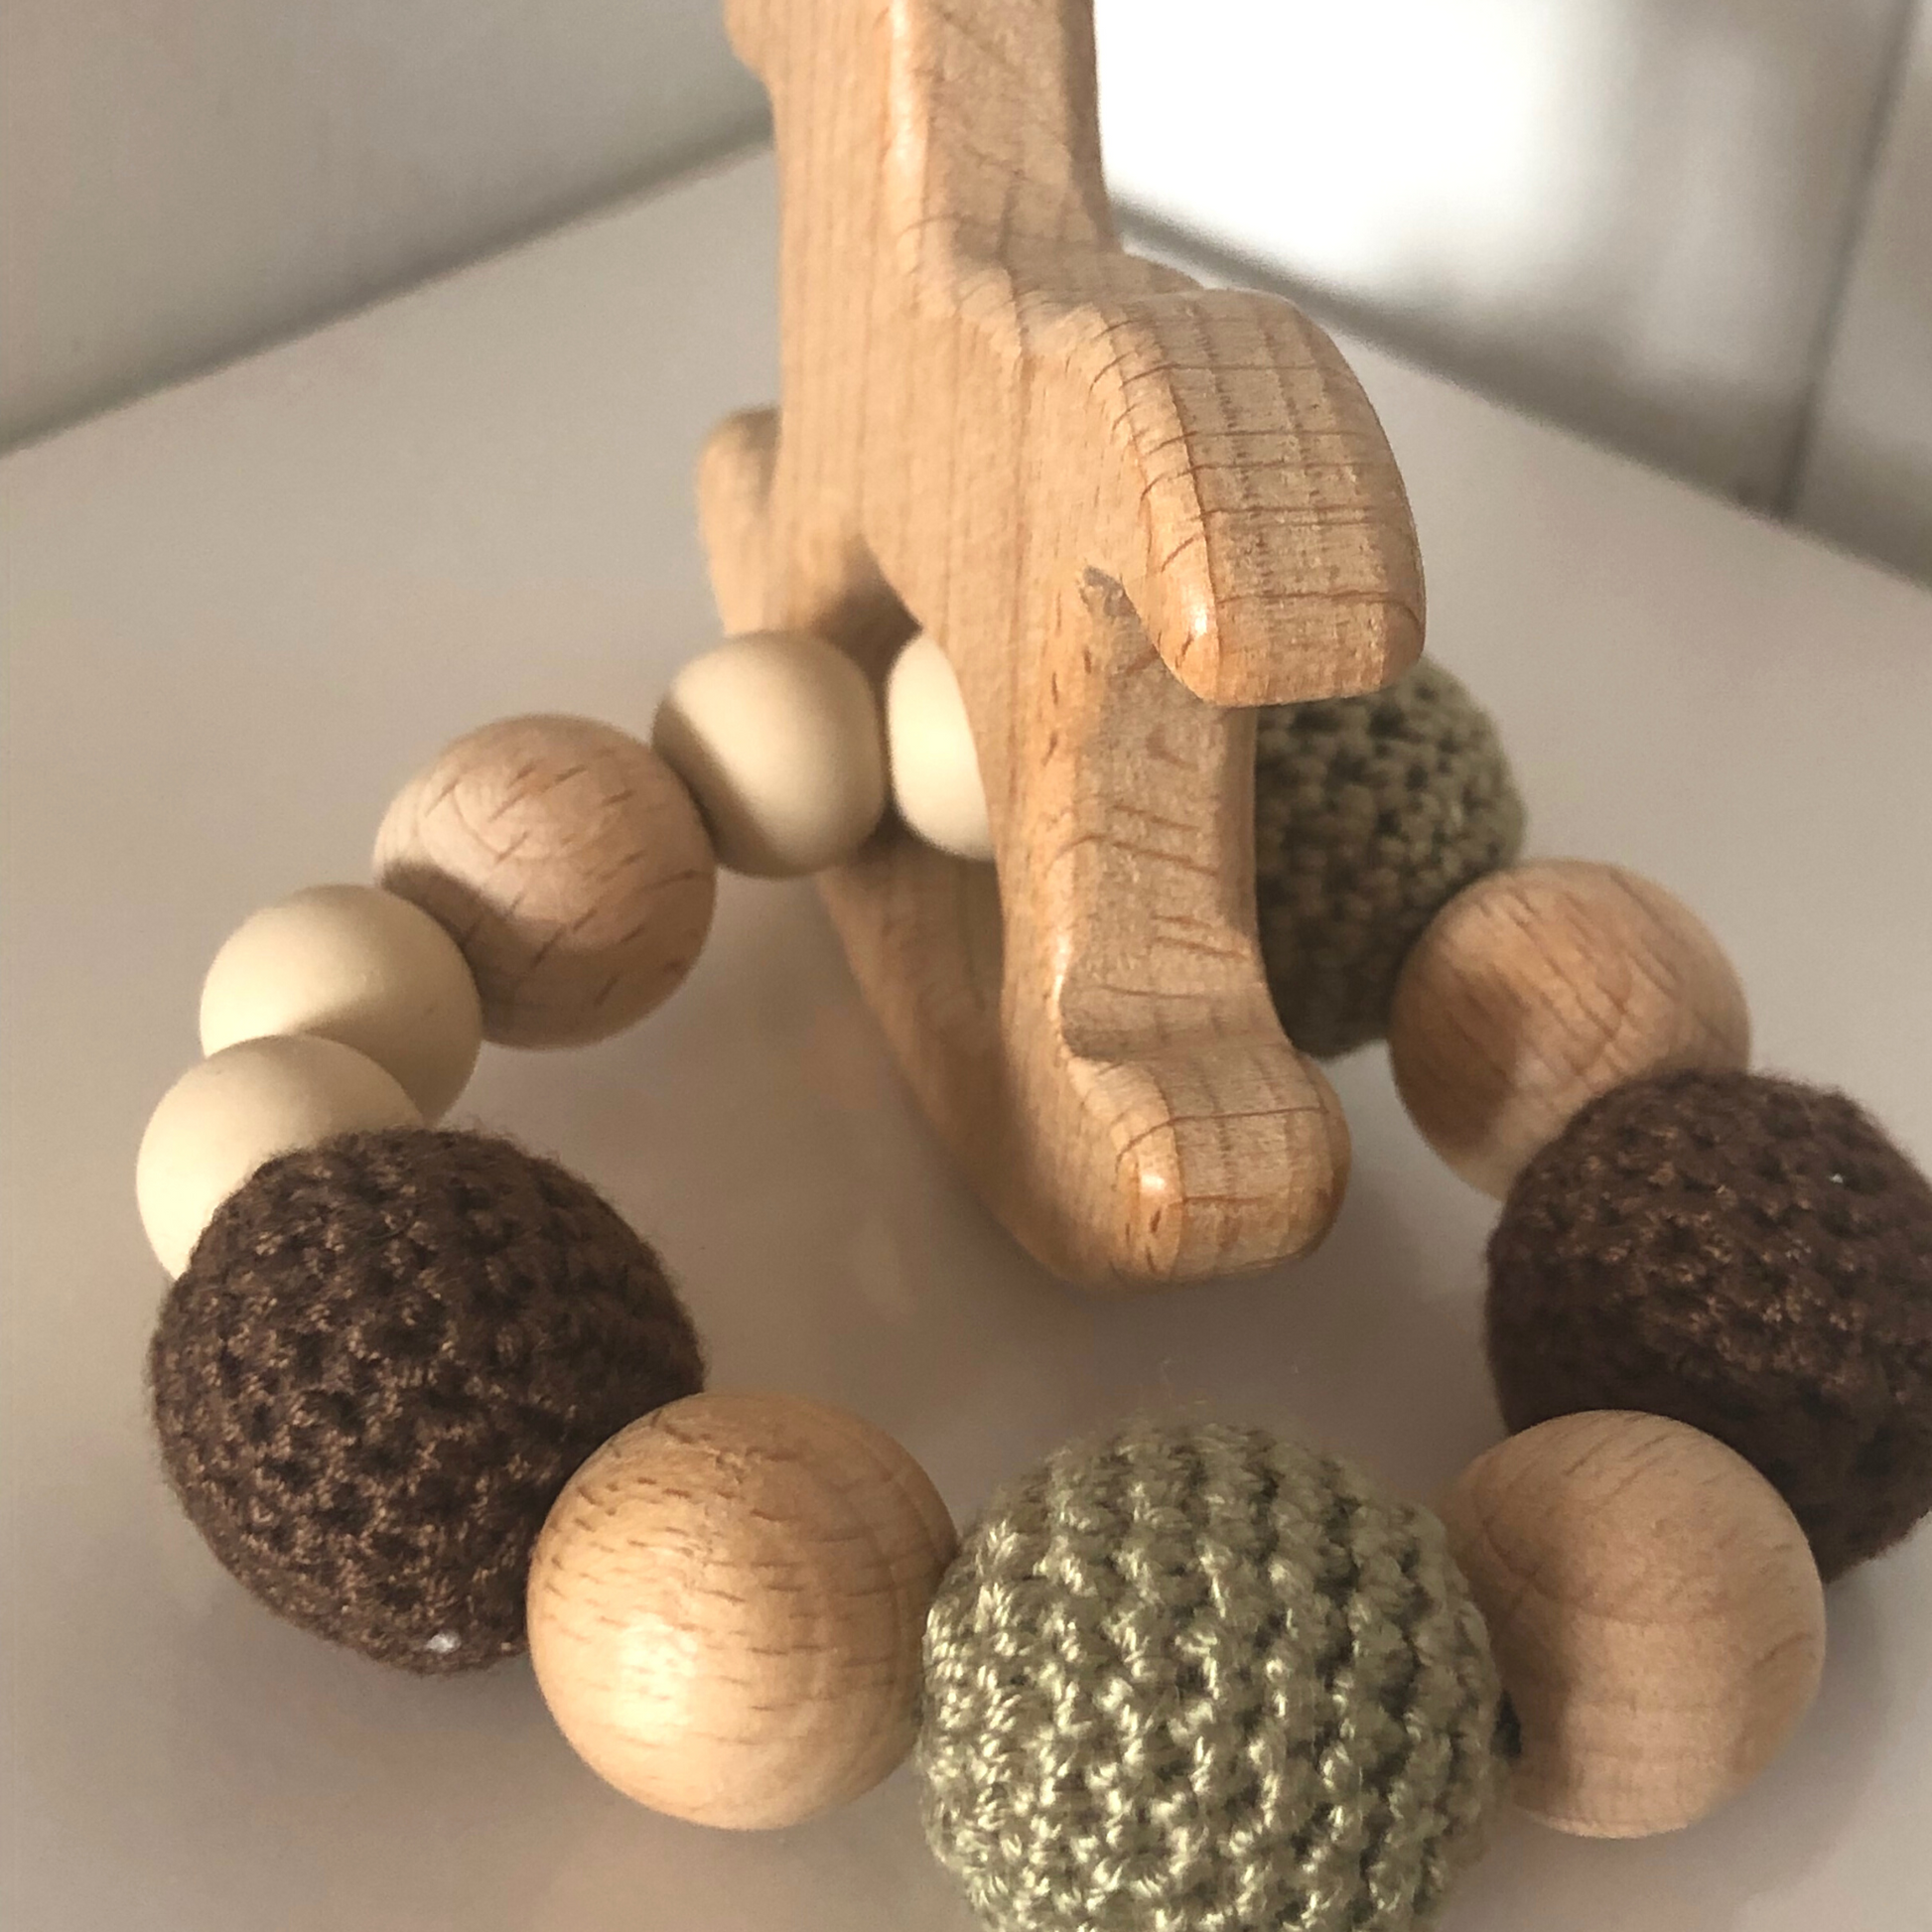 Wooden Baby Rattle - Medium Wood